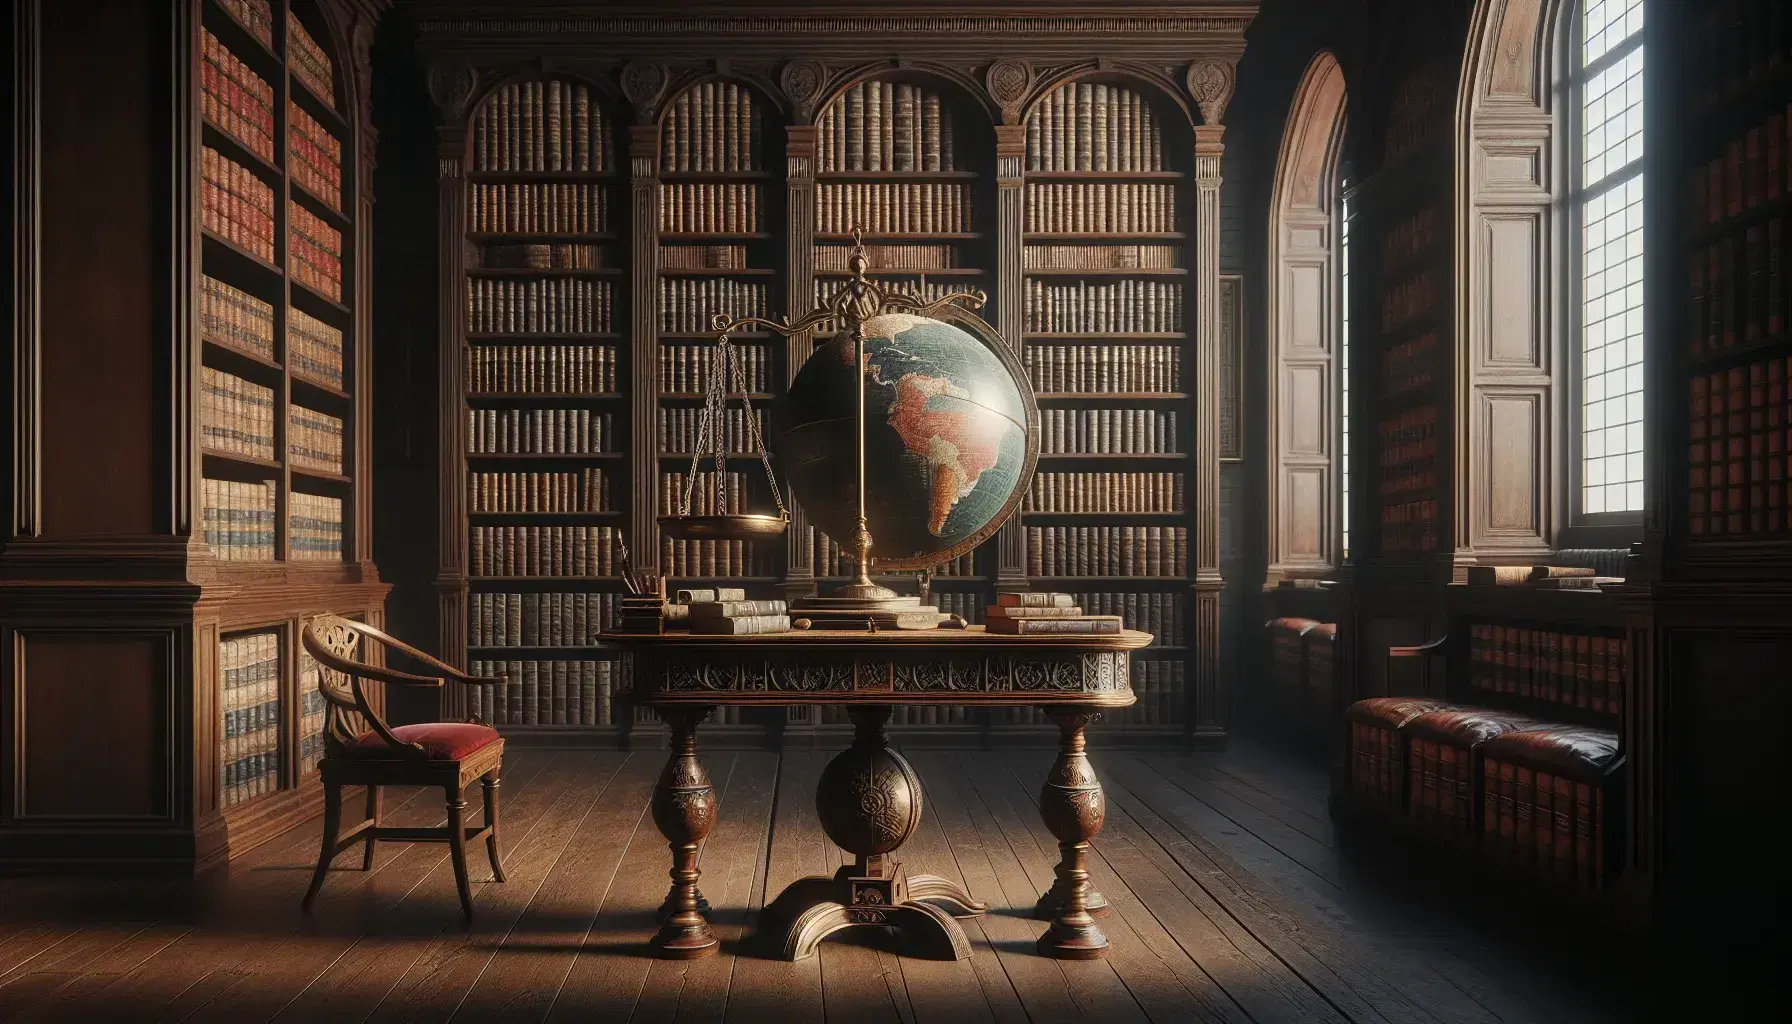 Biblioteca clásica con estanterías de madera oscura llenas de libros encuadernados en cuero, mesa central con globo antiguo y balanza de bronce, iluminada por ventana arqueada.